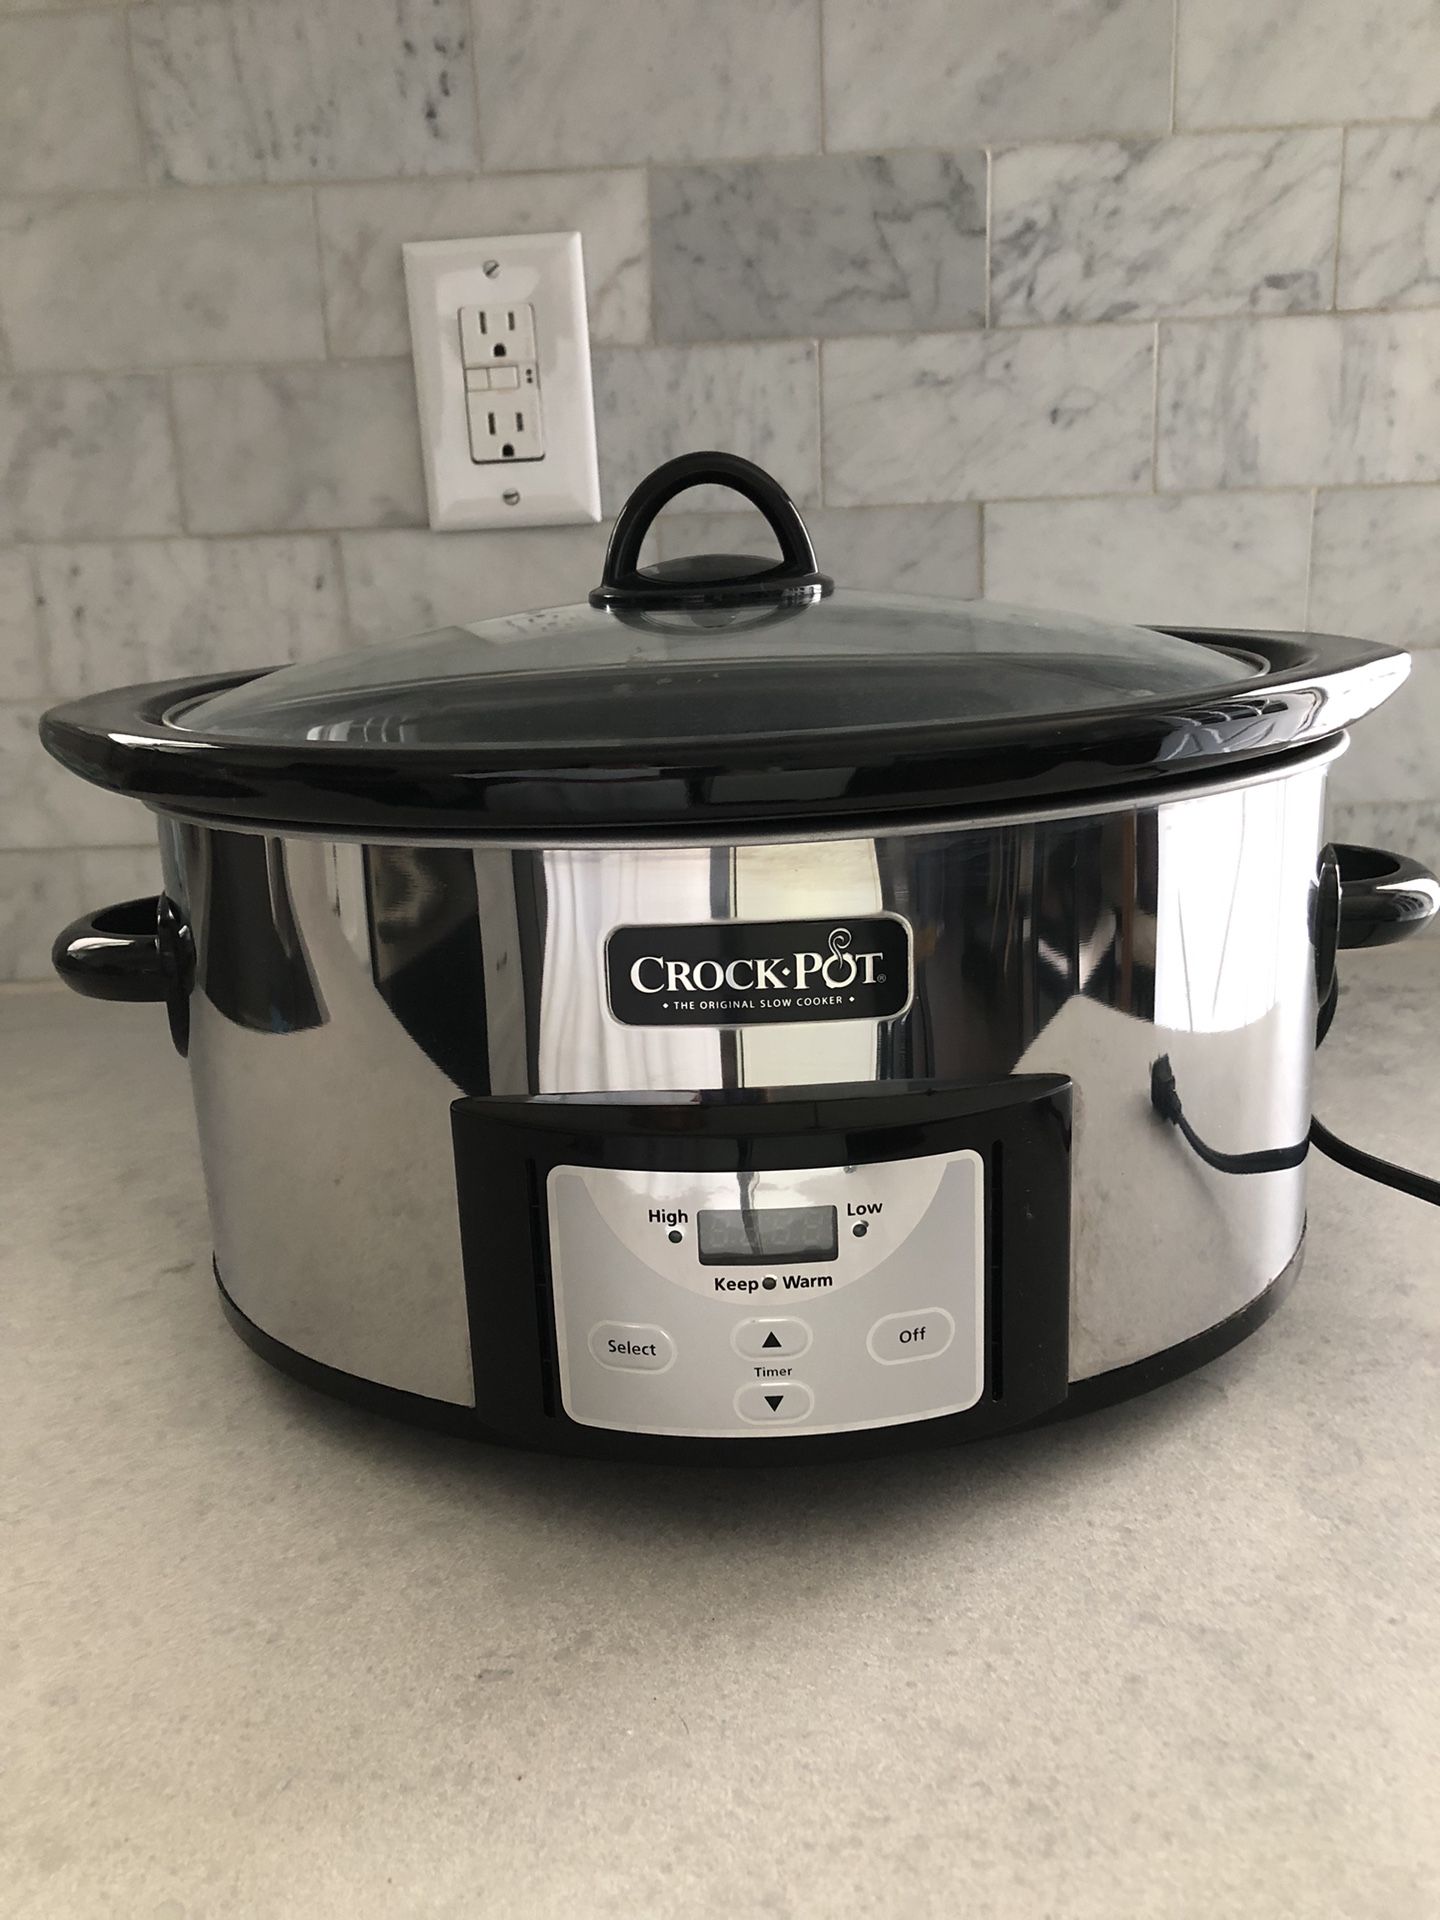 Crockpot 6 Qt. Programmable Slow Cooker for Sale in Stratford, NJ - OfferUp